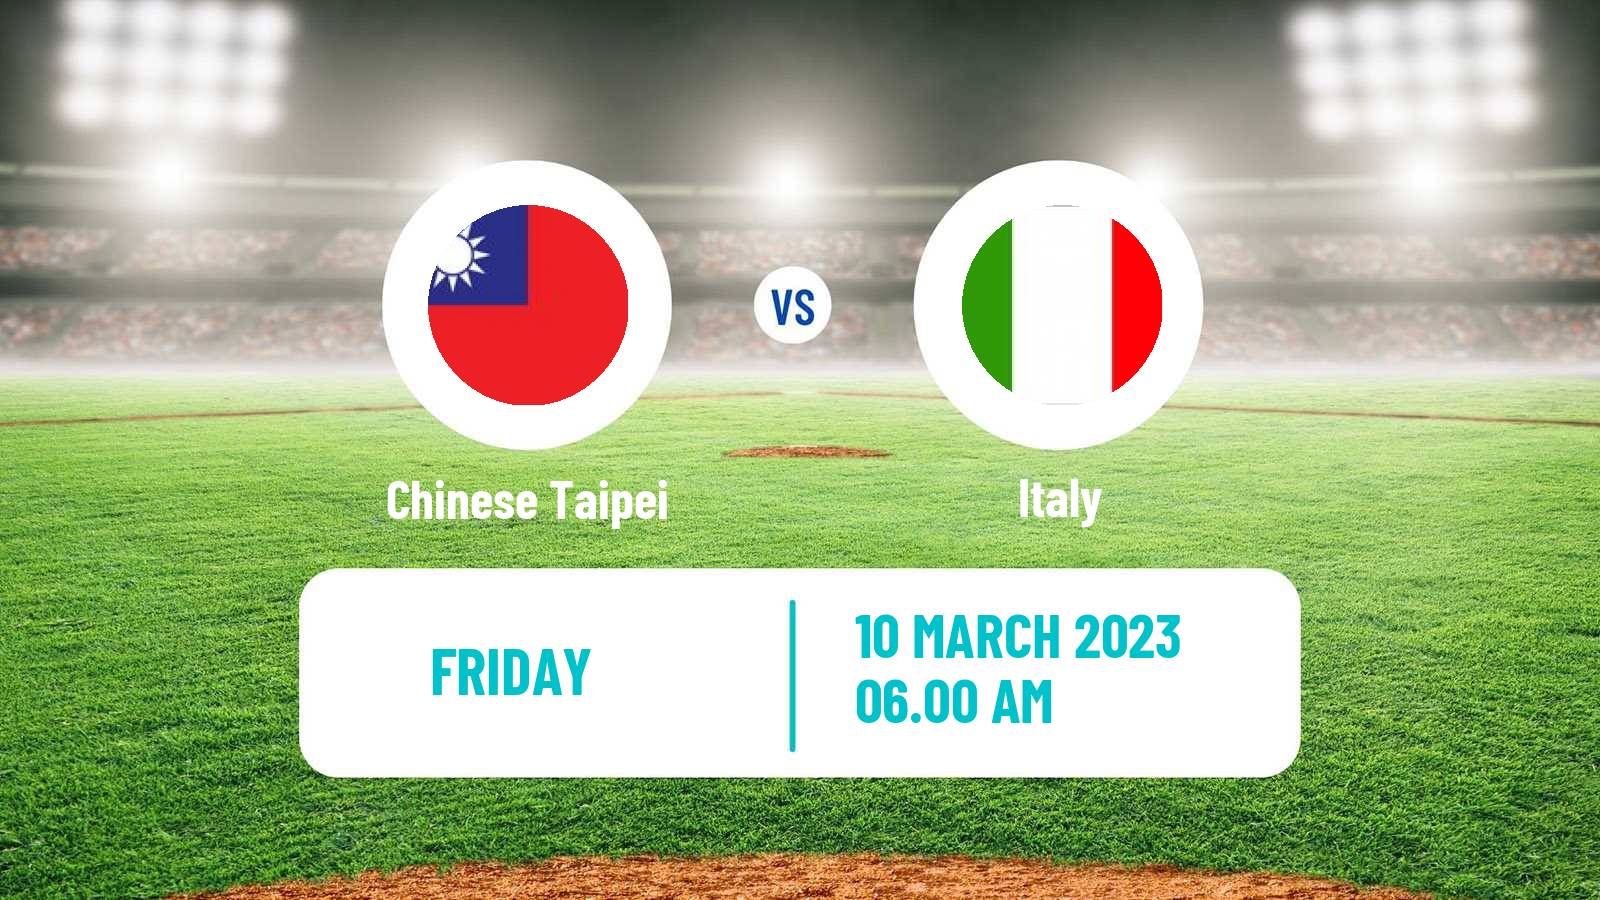 Baseball World Baseball Classic Chinese Taipei - Italy